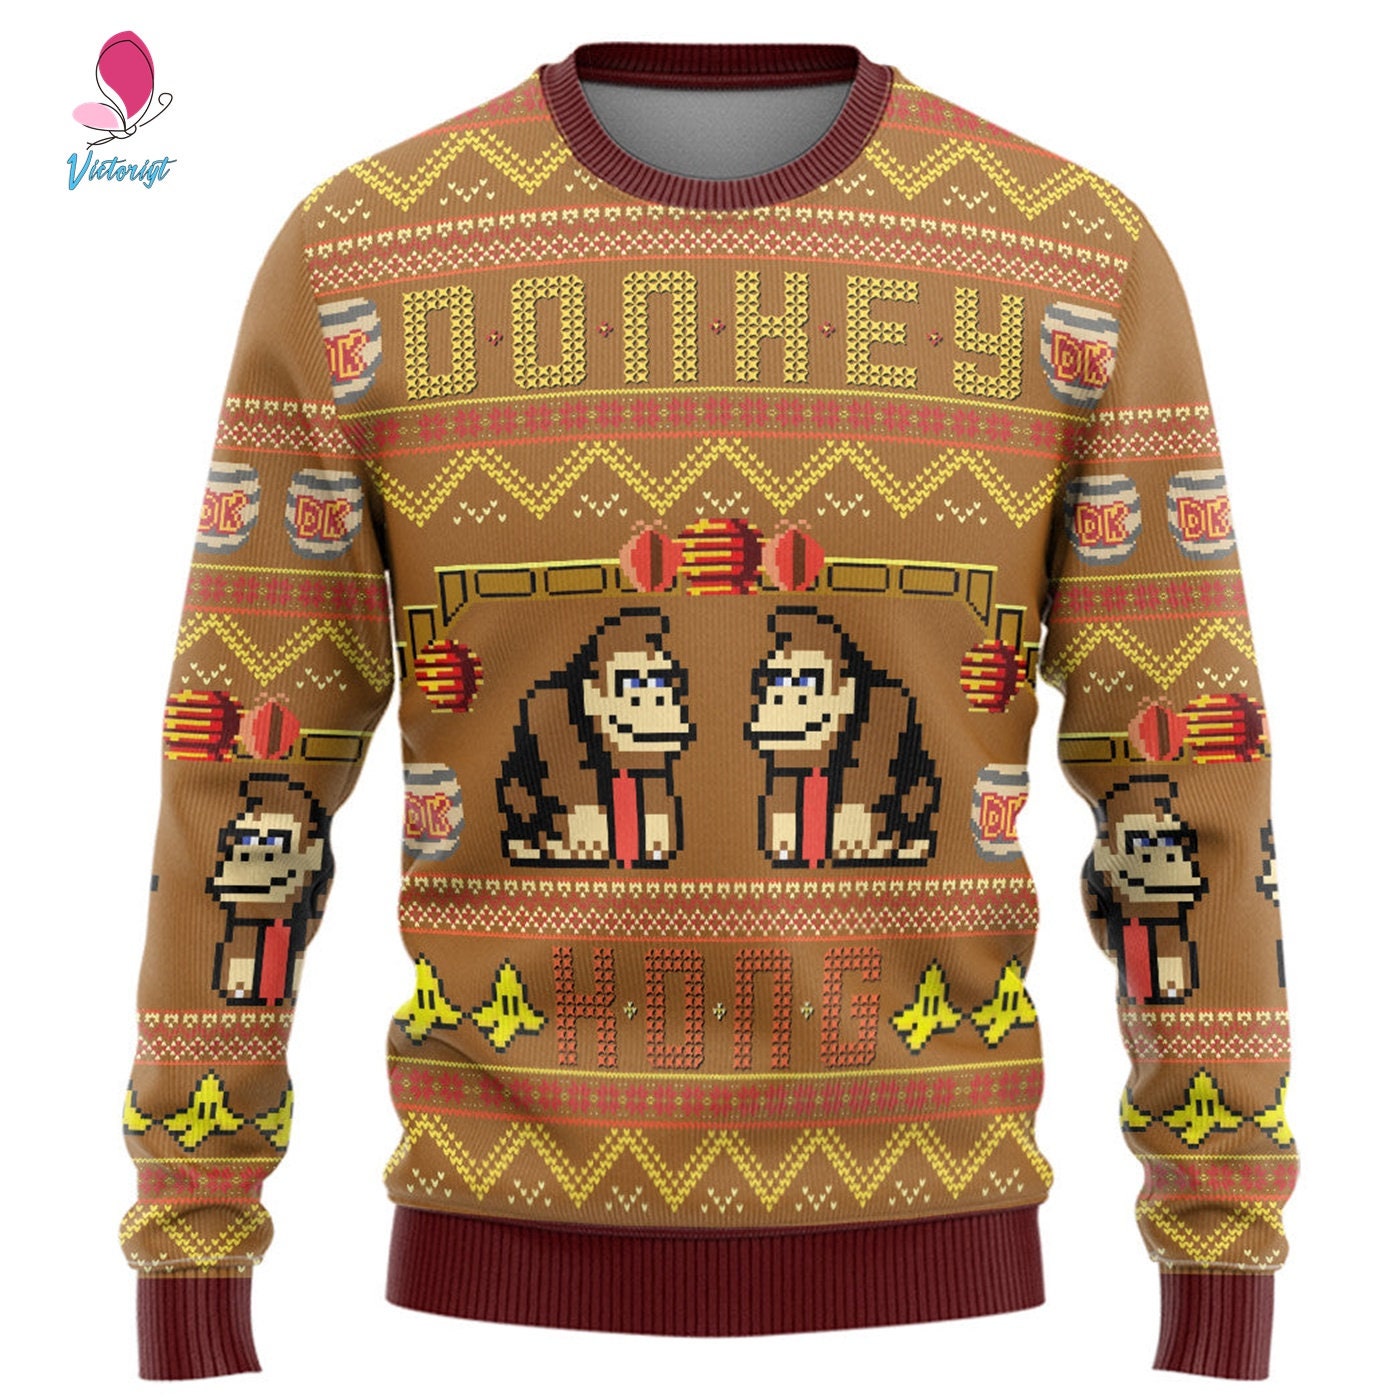 Discover Funny Donkey Kong Ugly Christmas Sweater, Monkey King Game Character Xmas Sweatshirt